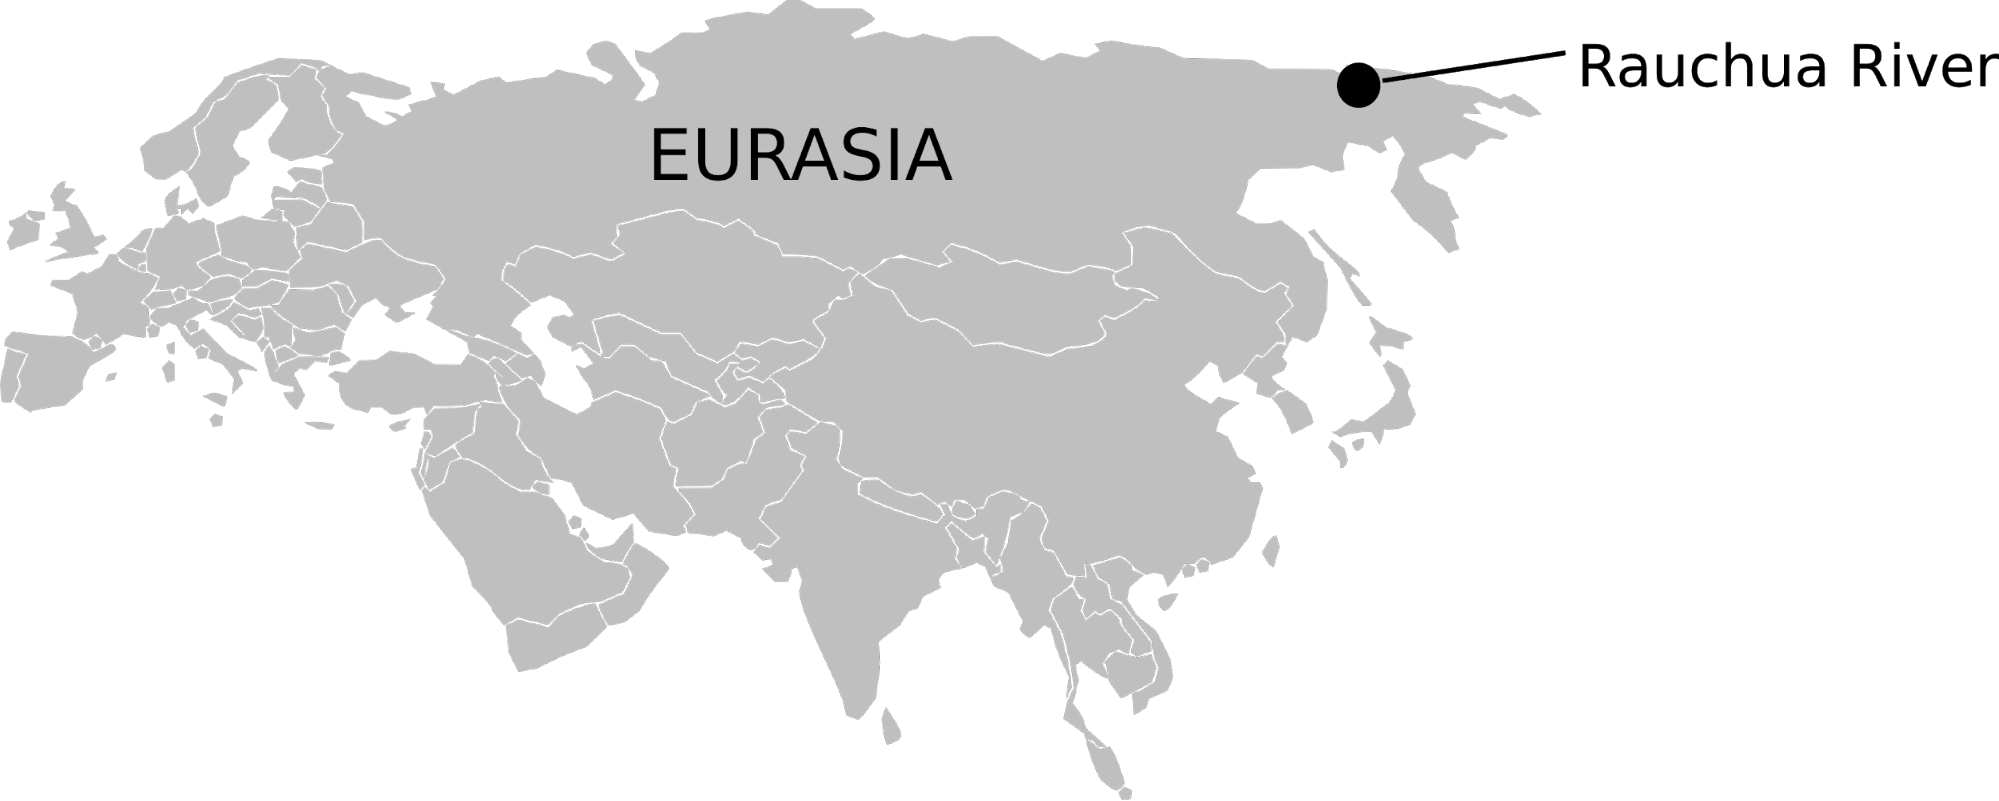 a map of eurasia